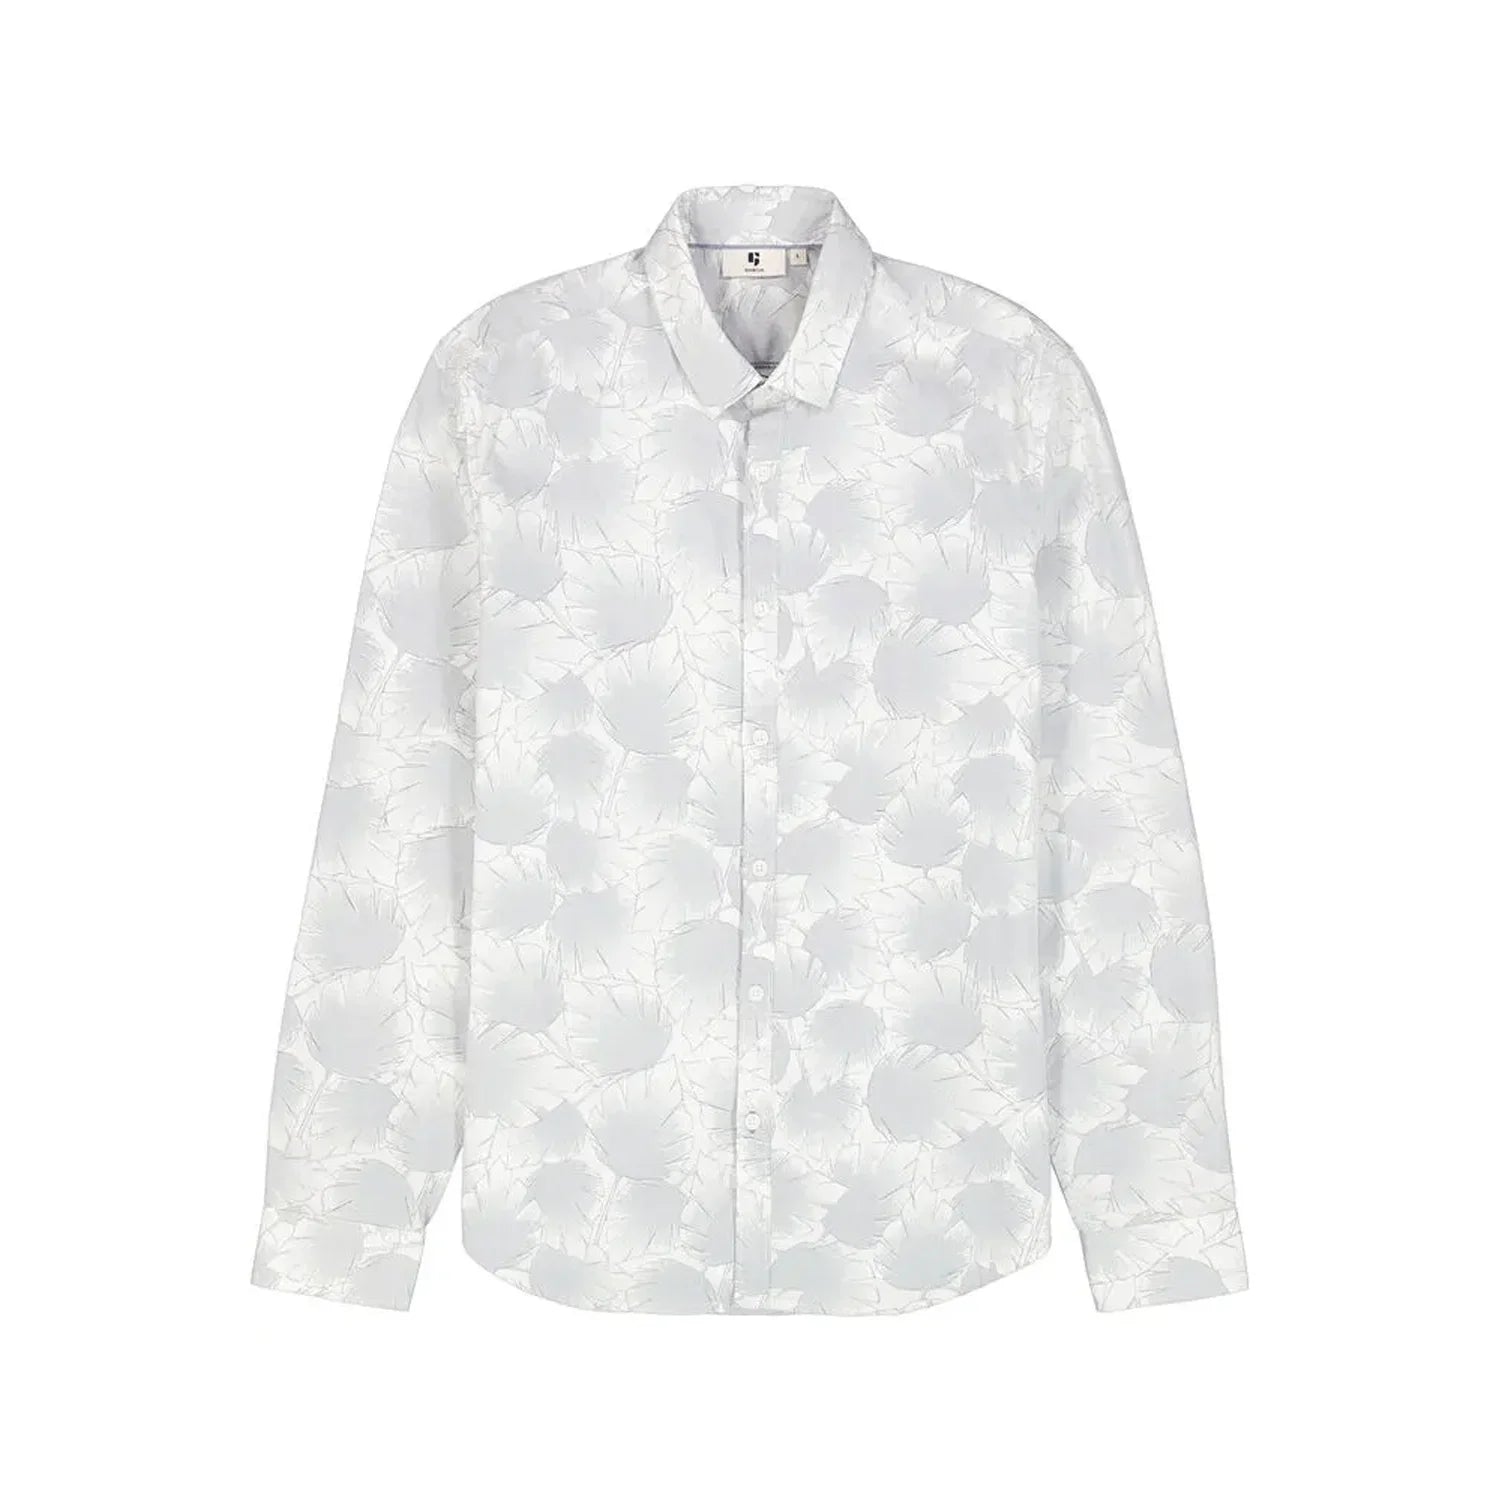 'Garcia O41080 Button Up Long Sleeve Shirt' in 'White Palm' colour